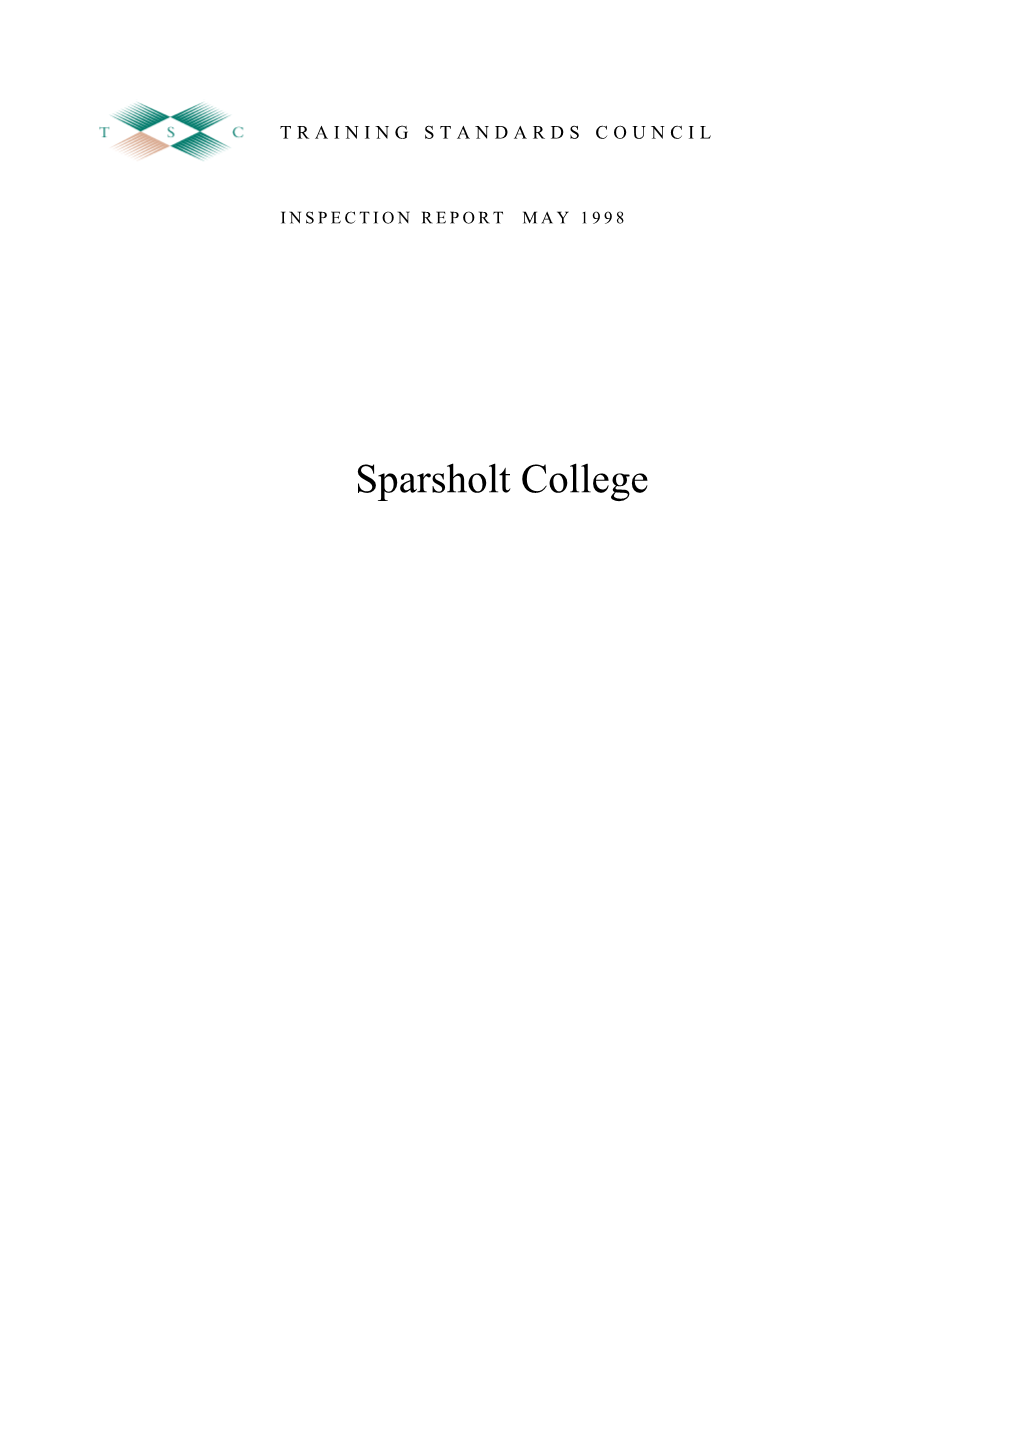 Sparsholt College INSPECTION REPORT: SPARSHOLT COLLEGE MAY 1999